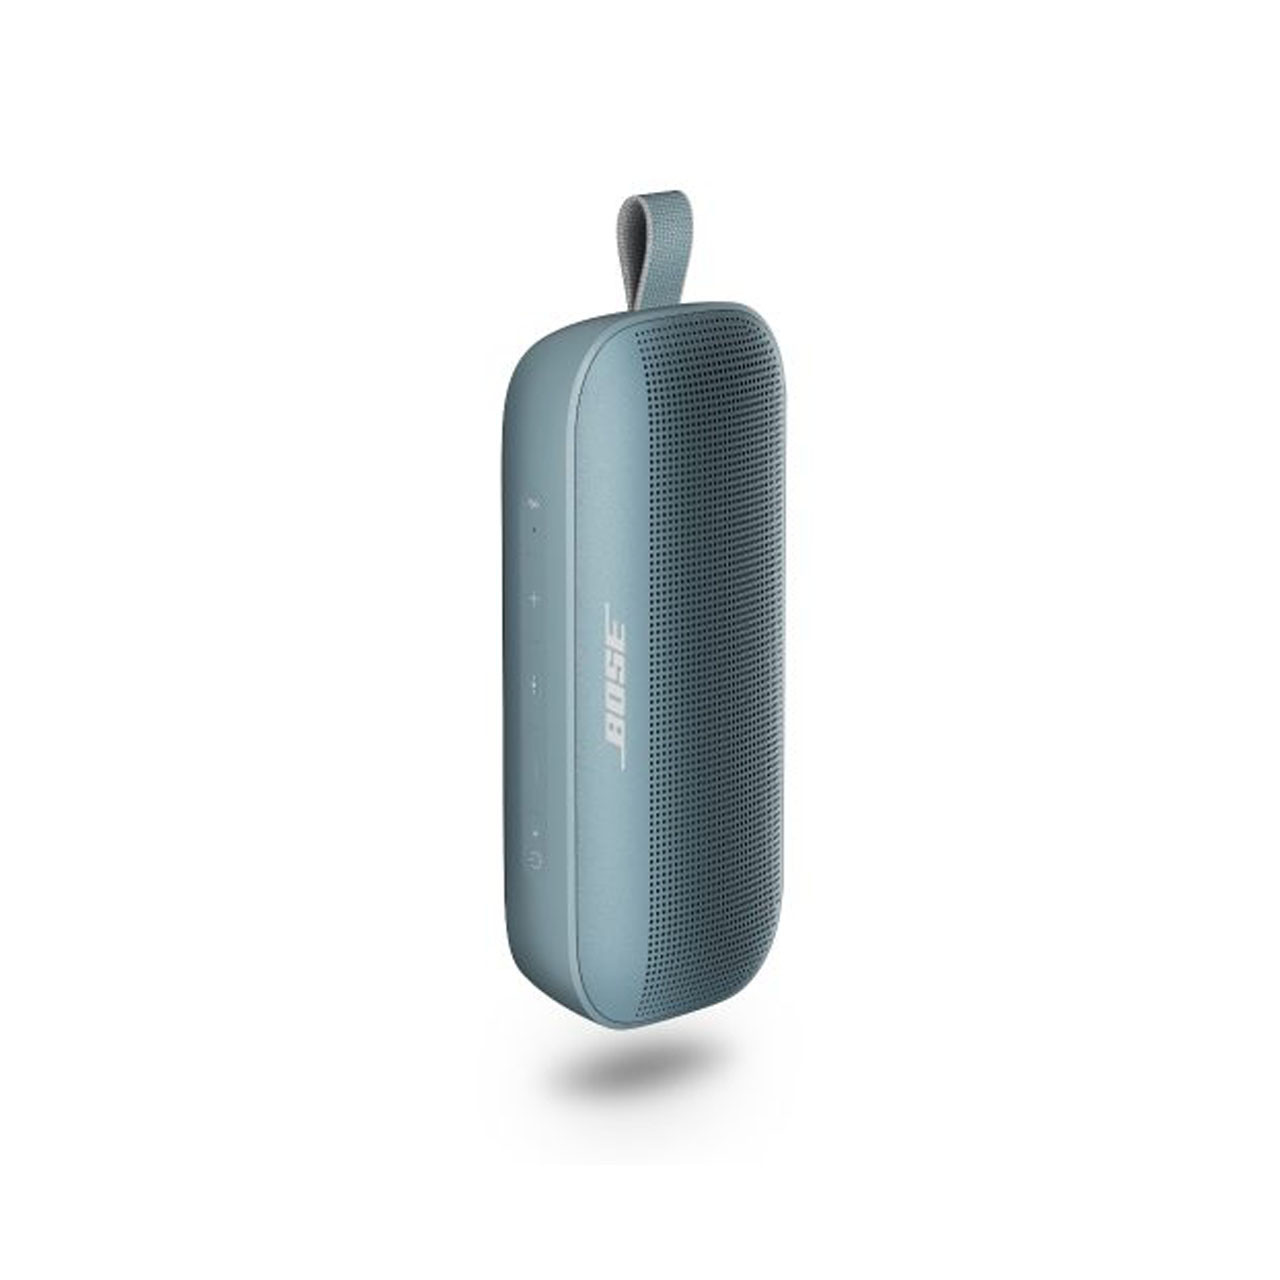 Bose SoundLink Flex Portable Bluetooth Speaker with Waterproof